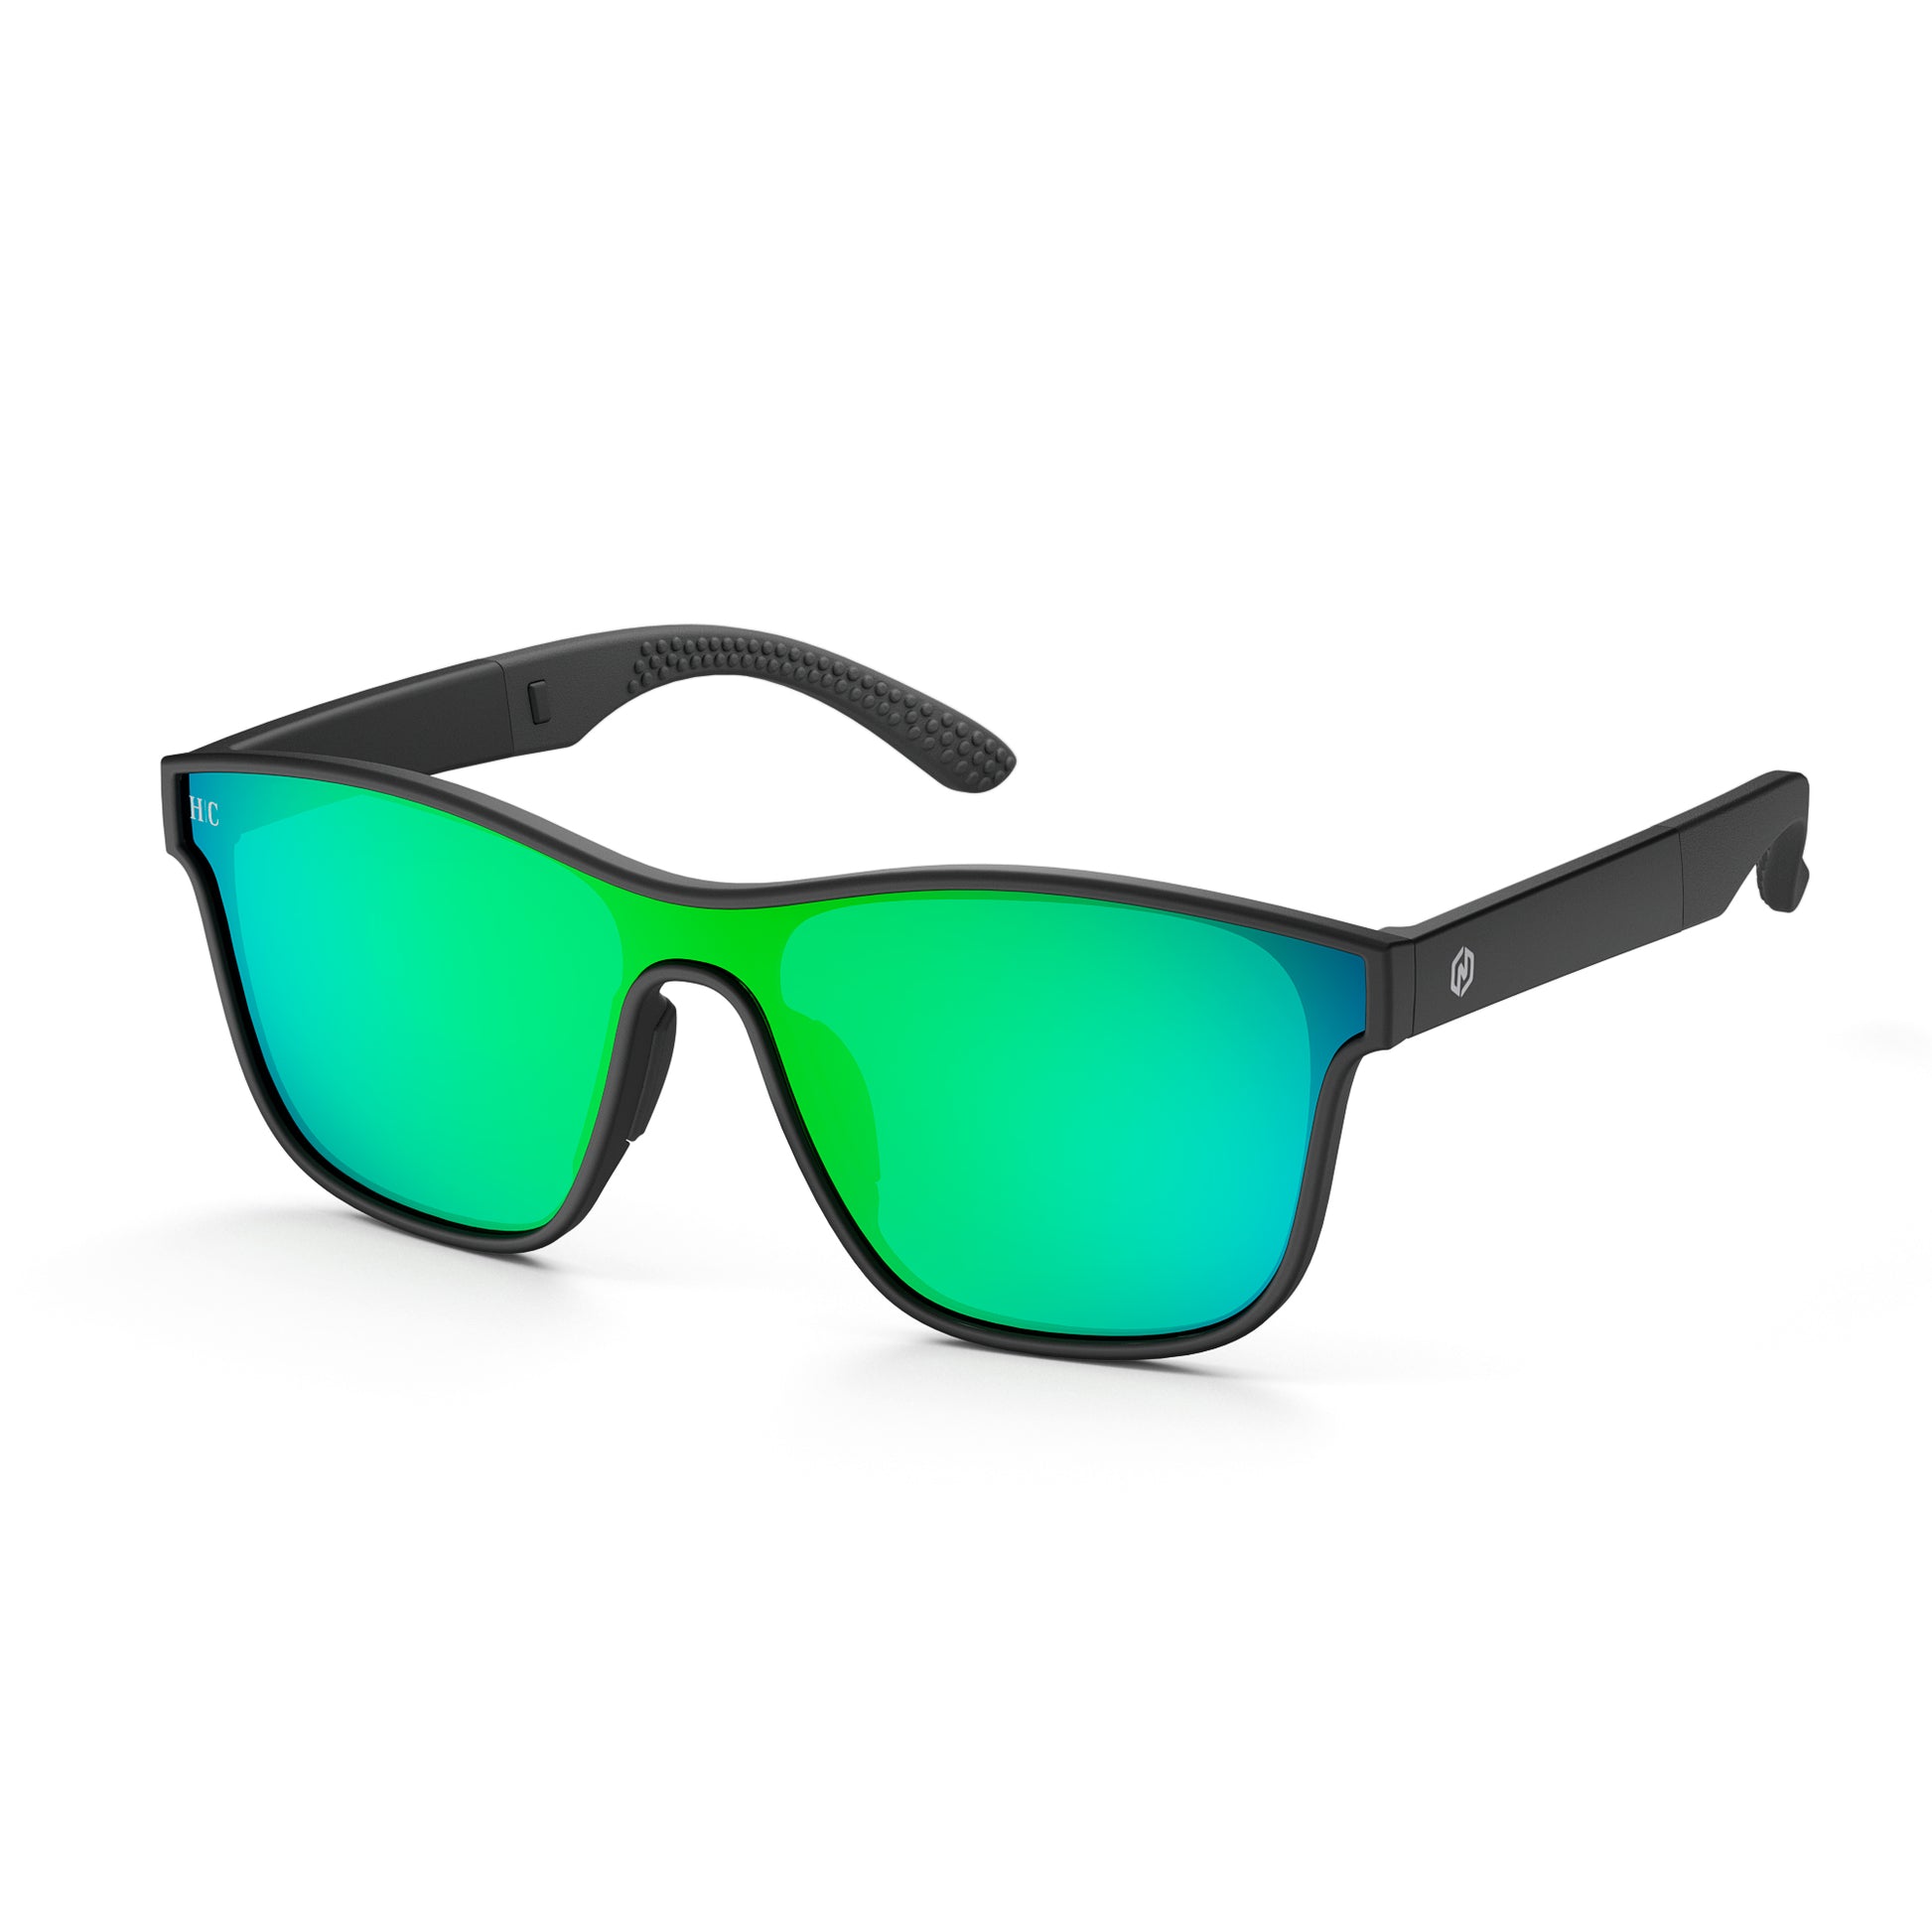 Nordik RIKR, Sports Sunglasses for Cycling & Running